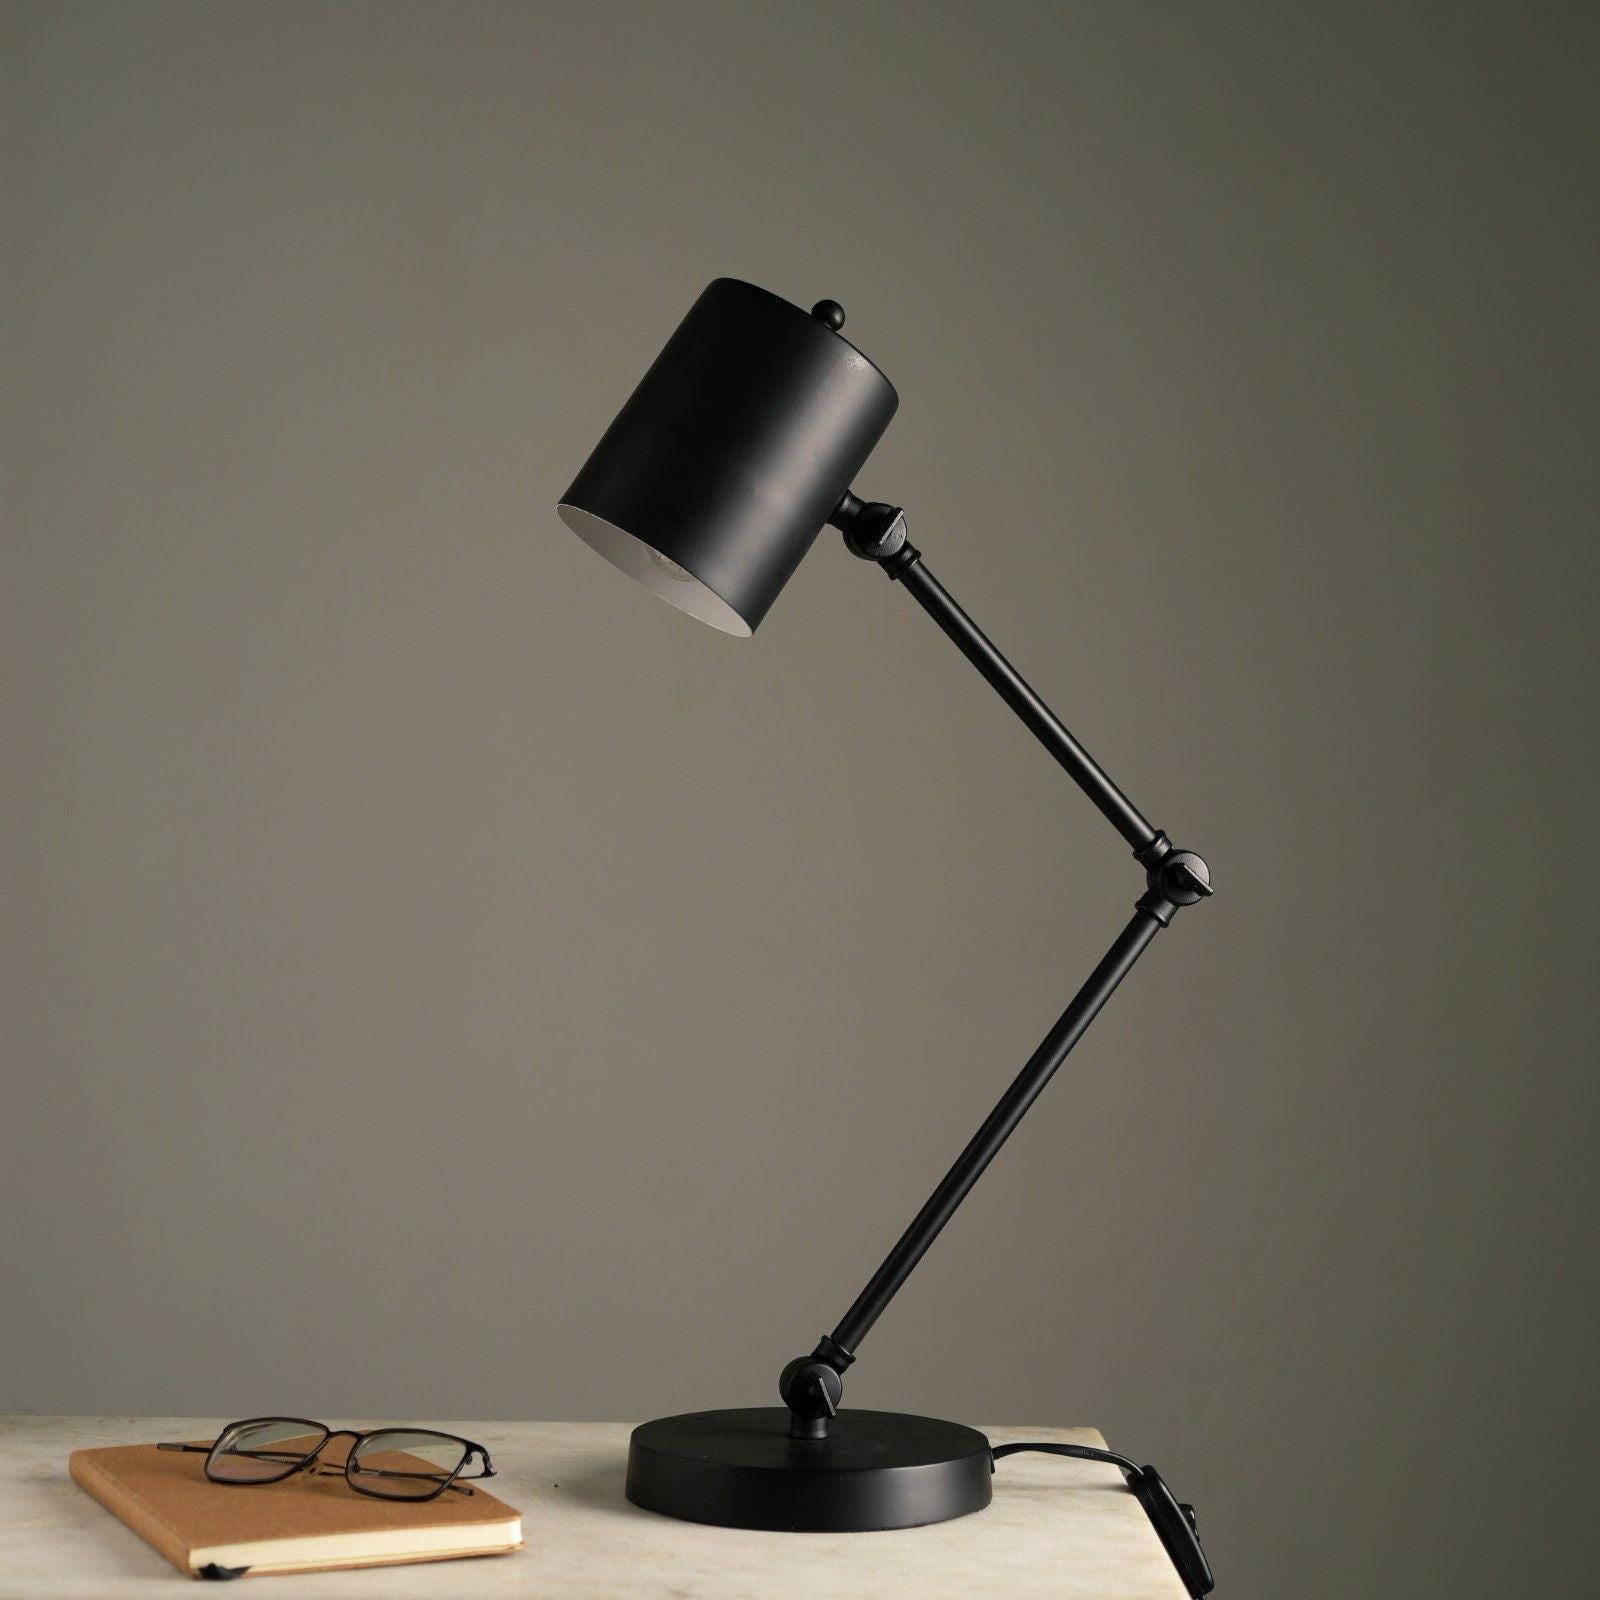 Book Boom Lamp - Black, Modern Scandinavian Design, Premium Metallic Finish, Elegant Swivels